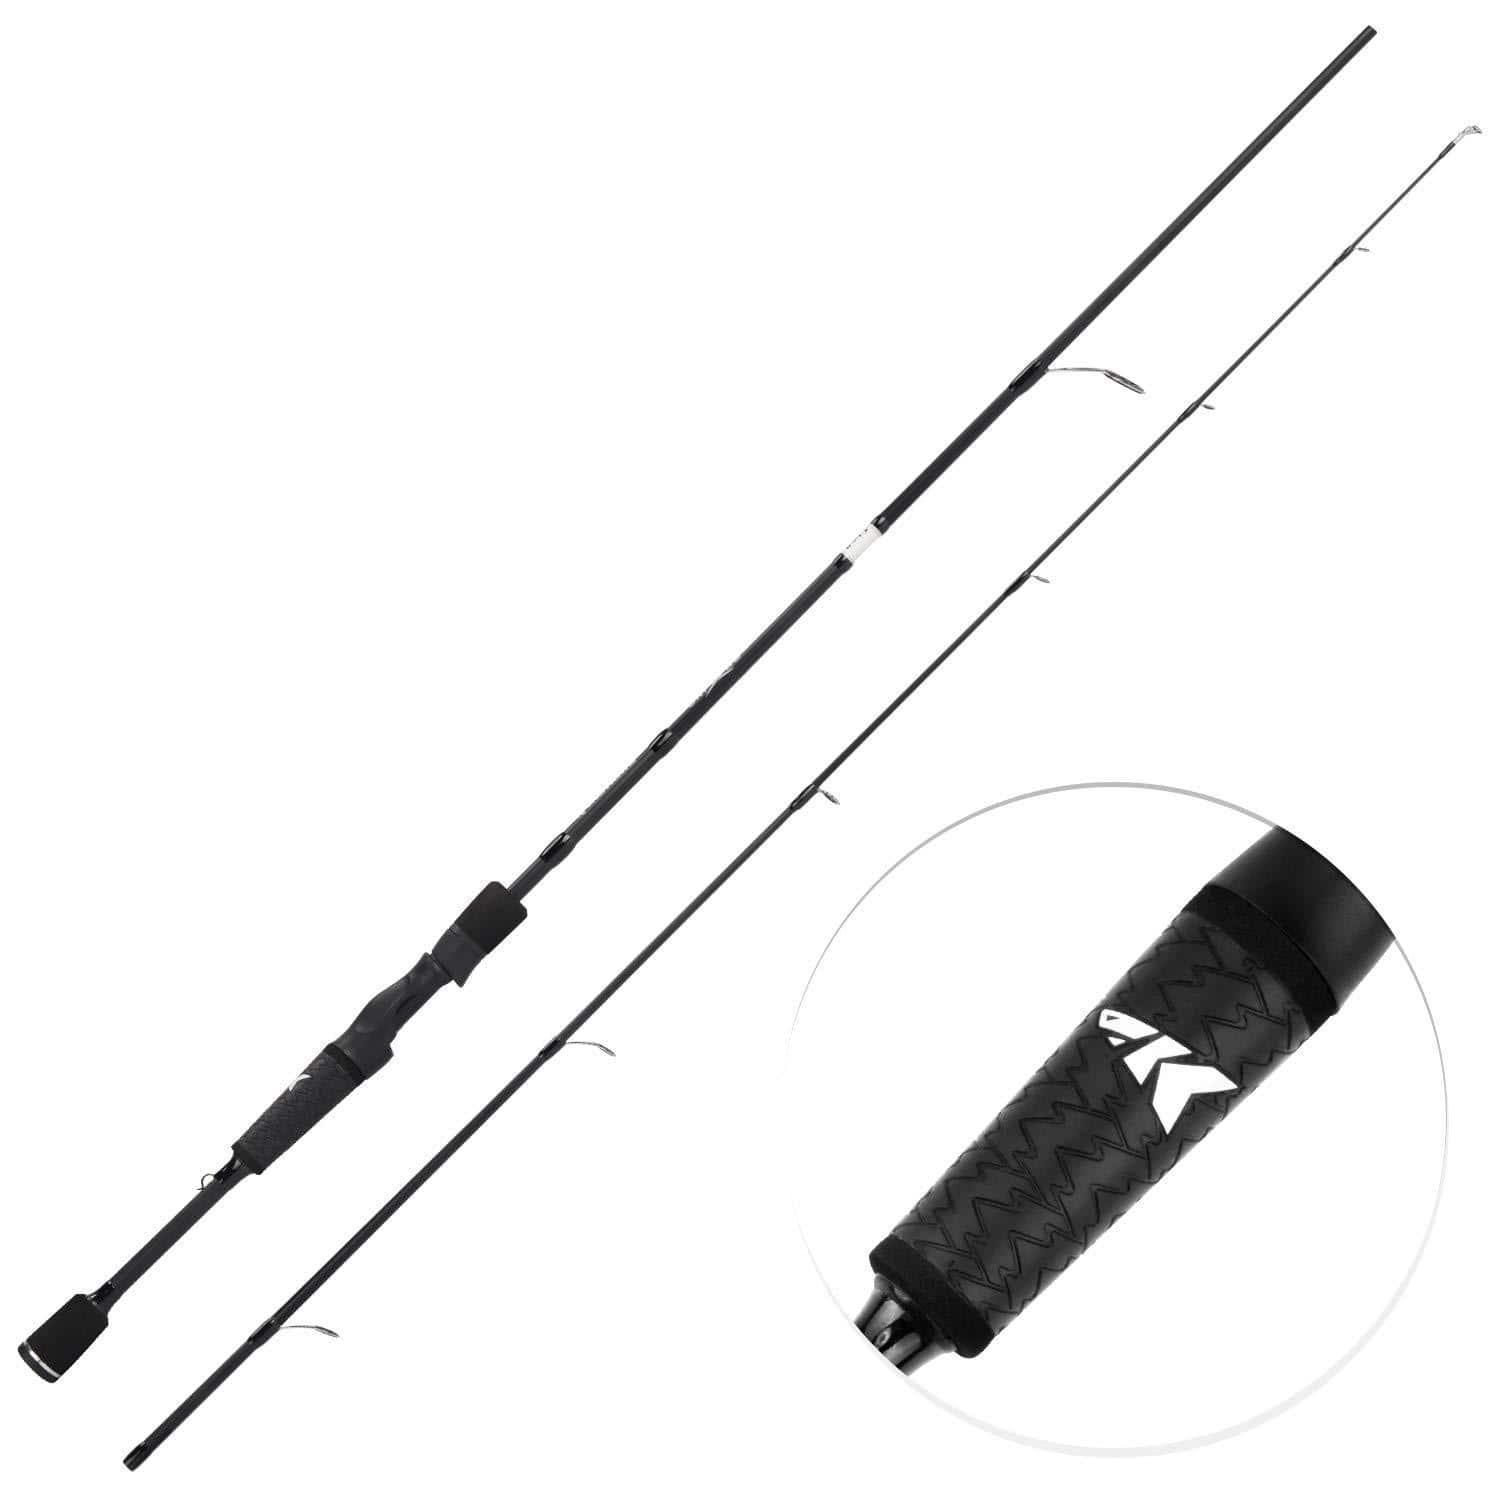 KastKing Crixus Fishing Rods - Spinning / 5'6 / Moderate Fast-Light-2Pcs